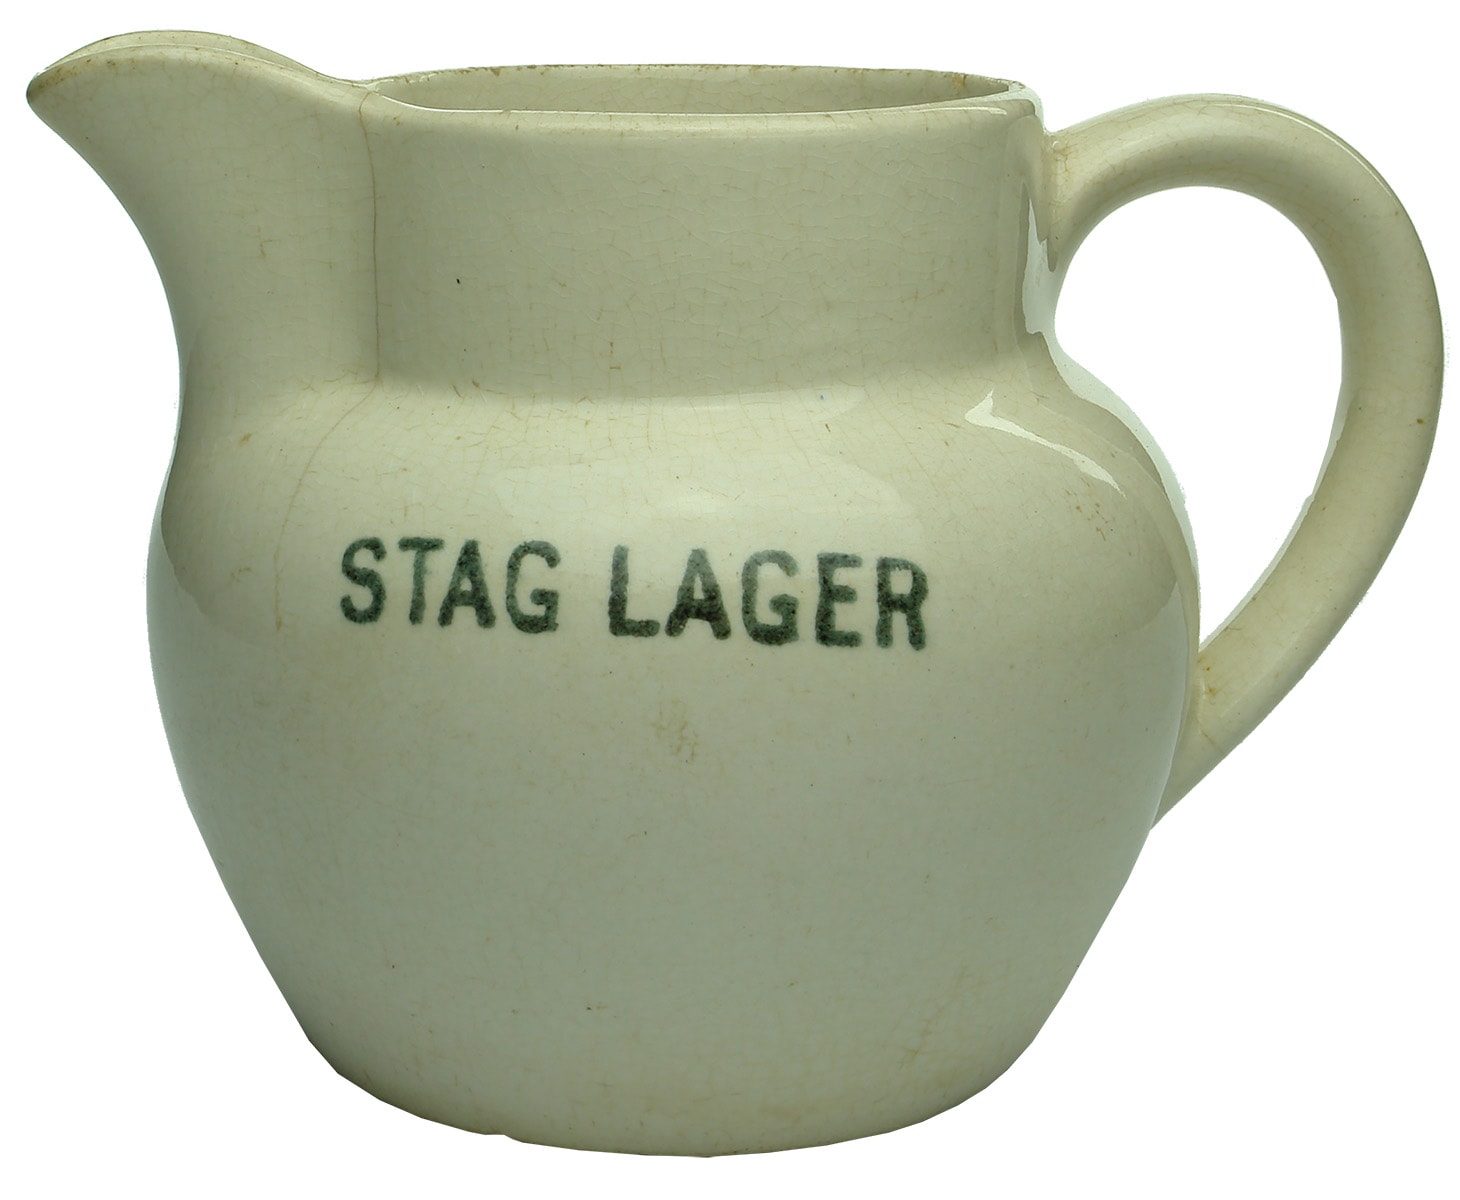 Stag Lager Standard Bitter Ale Advertising Jug